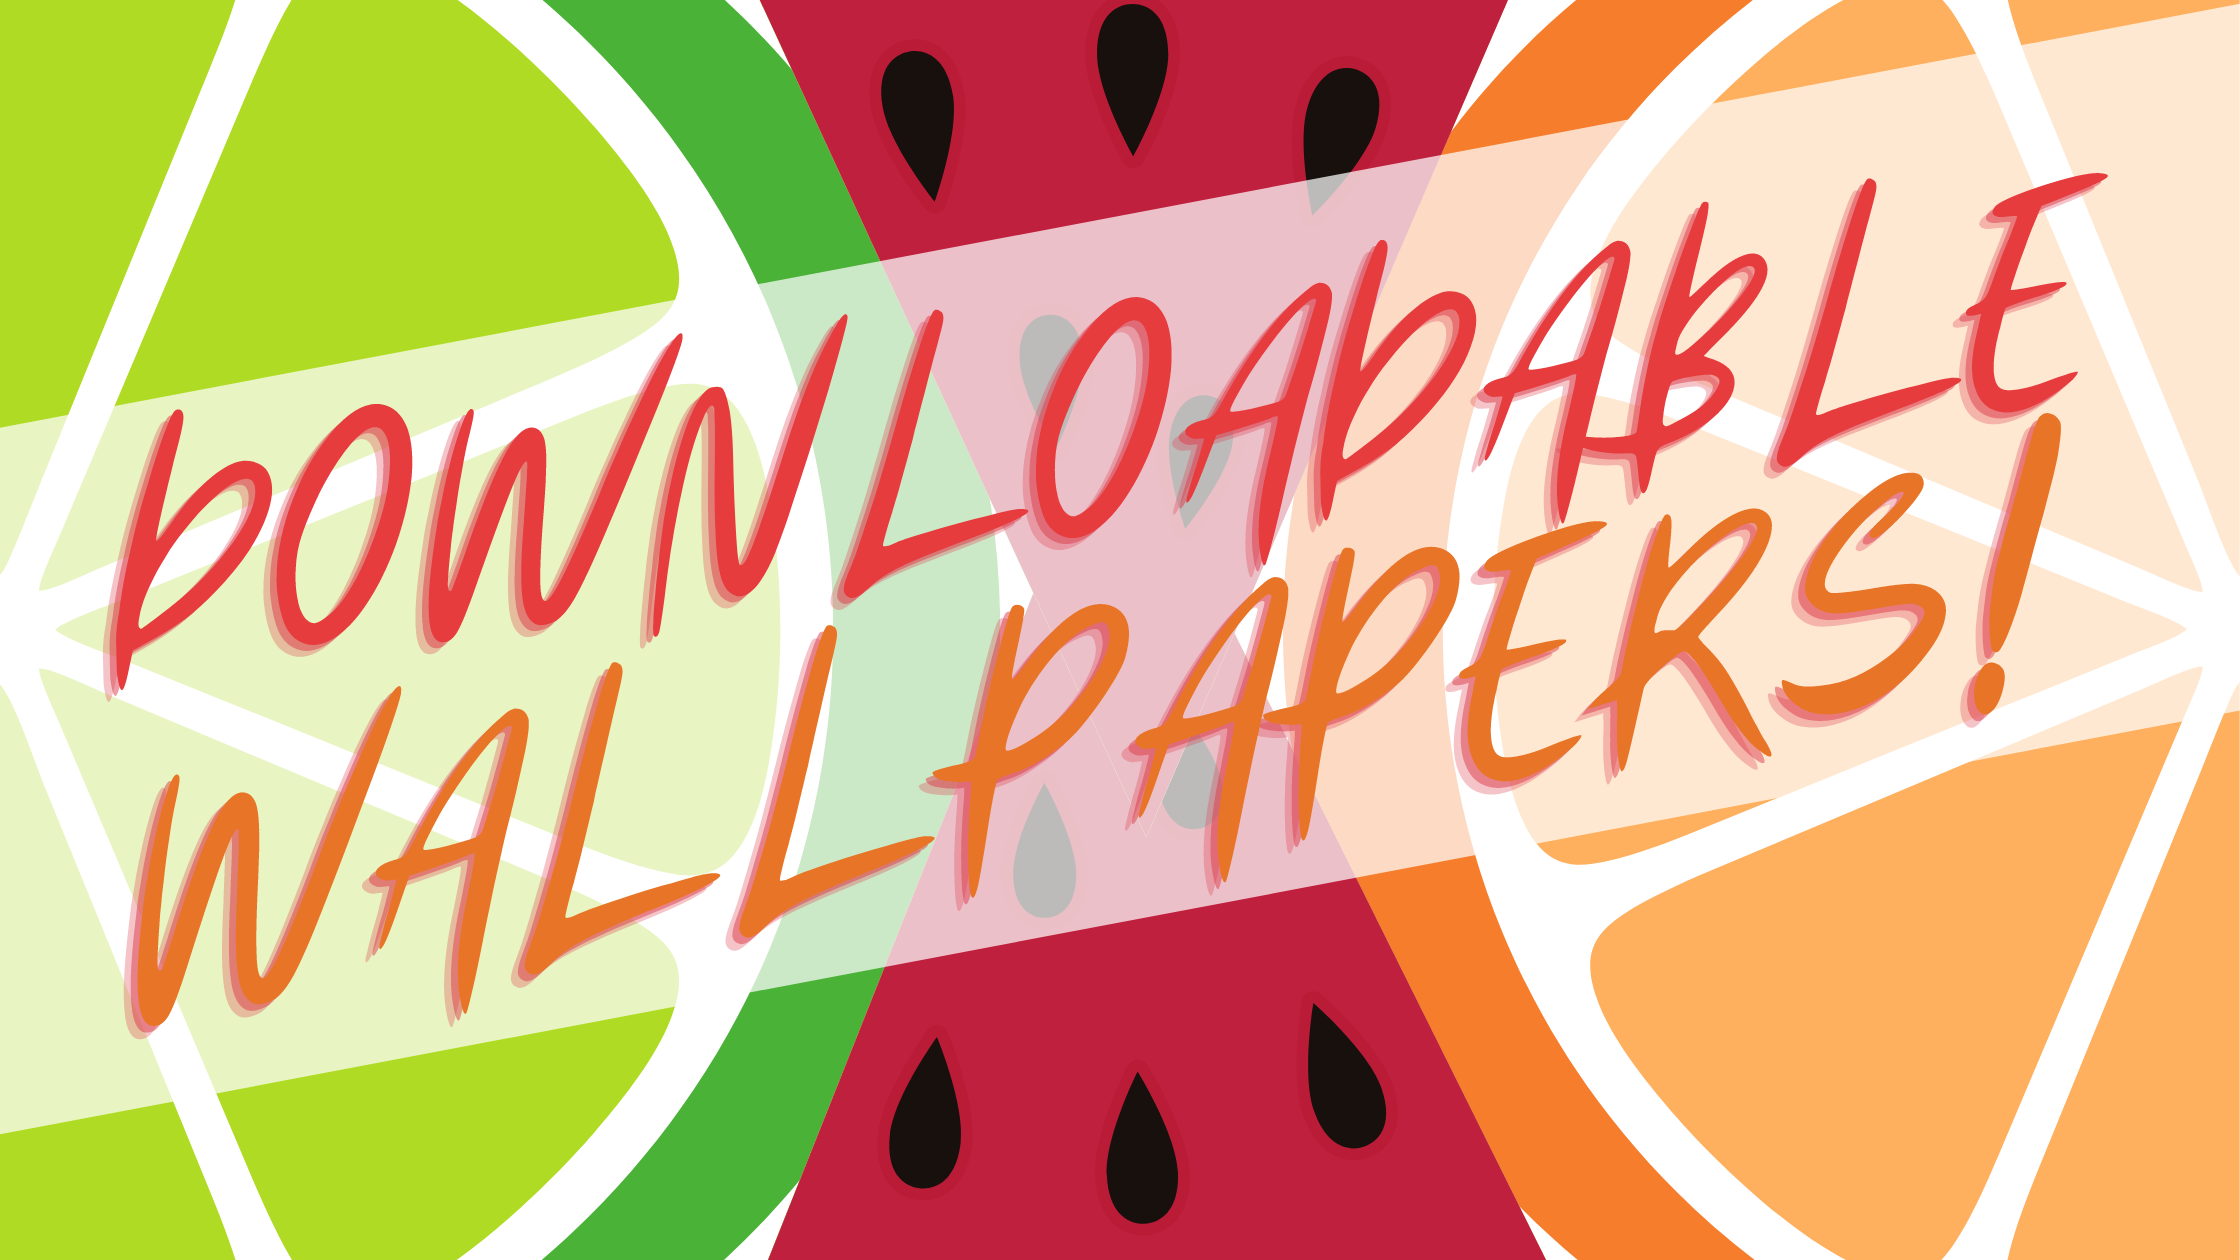 DOWNLOADABLE WALLPAPERS! Blog Banner